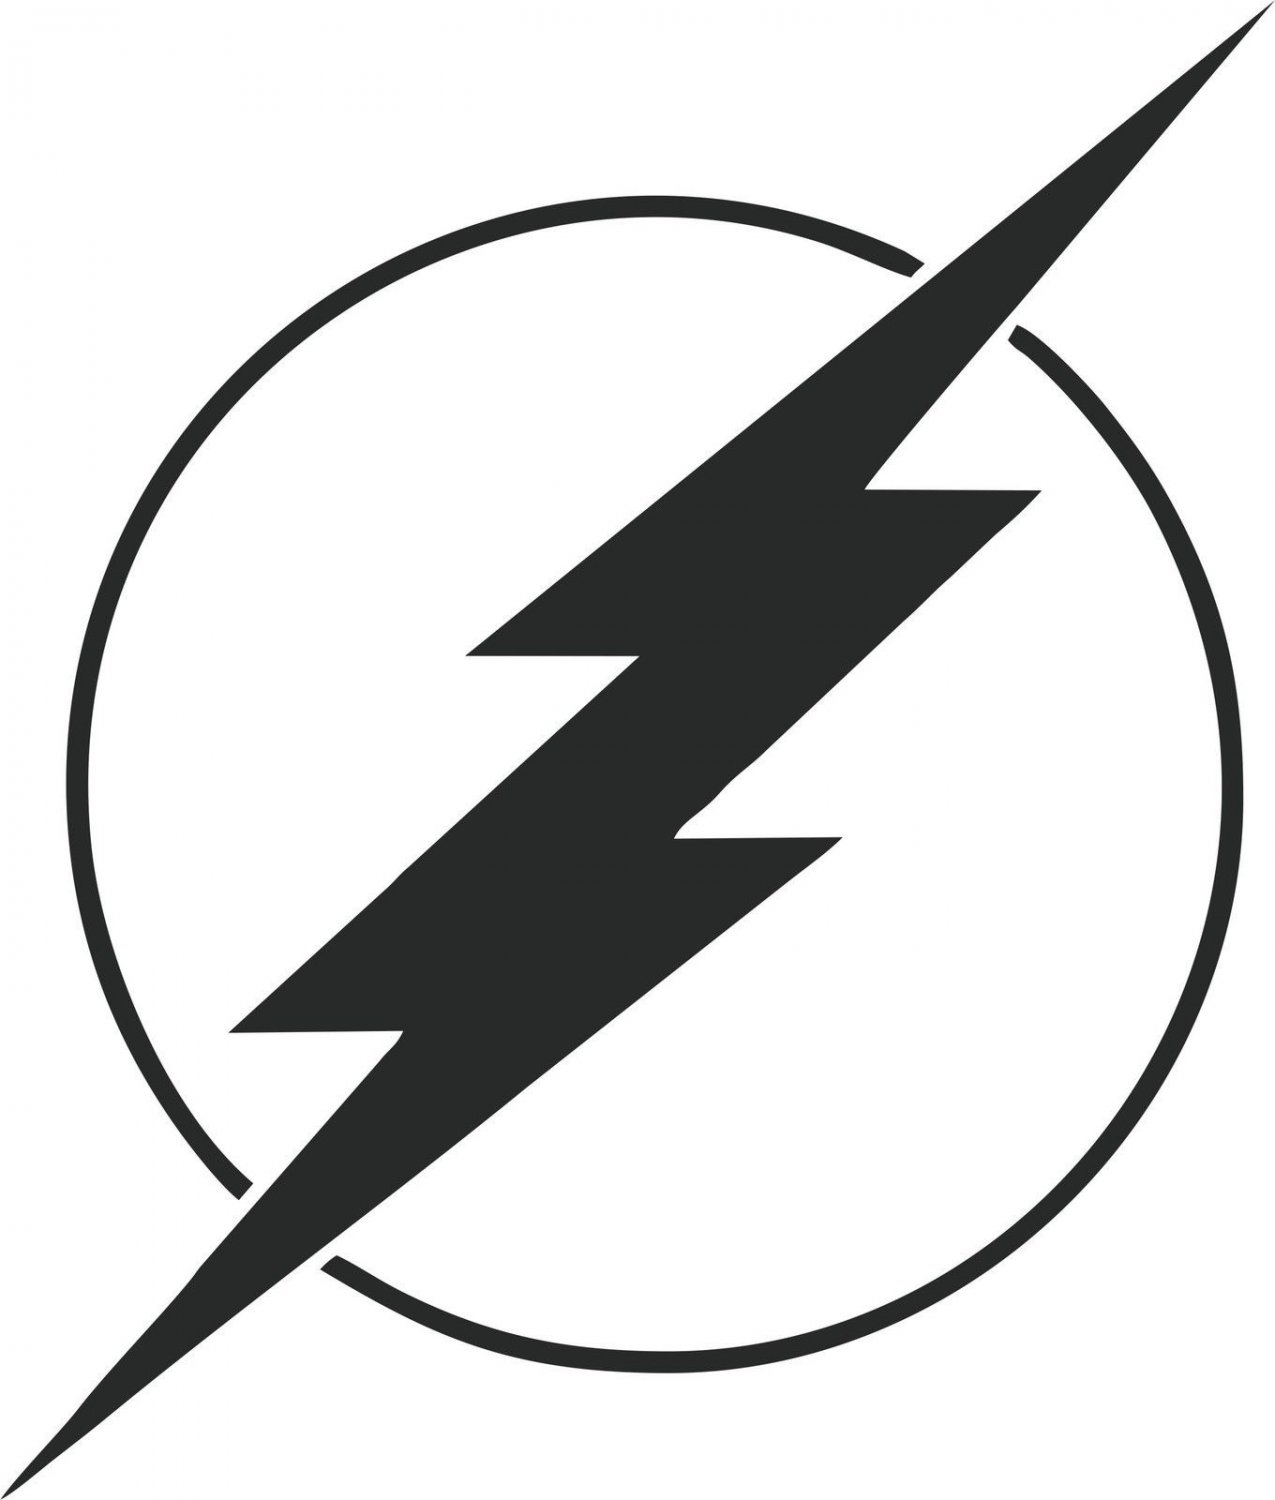 Free White Lightning Bolt Png, Download Free Clip Art, Free.